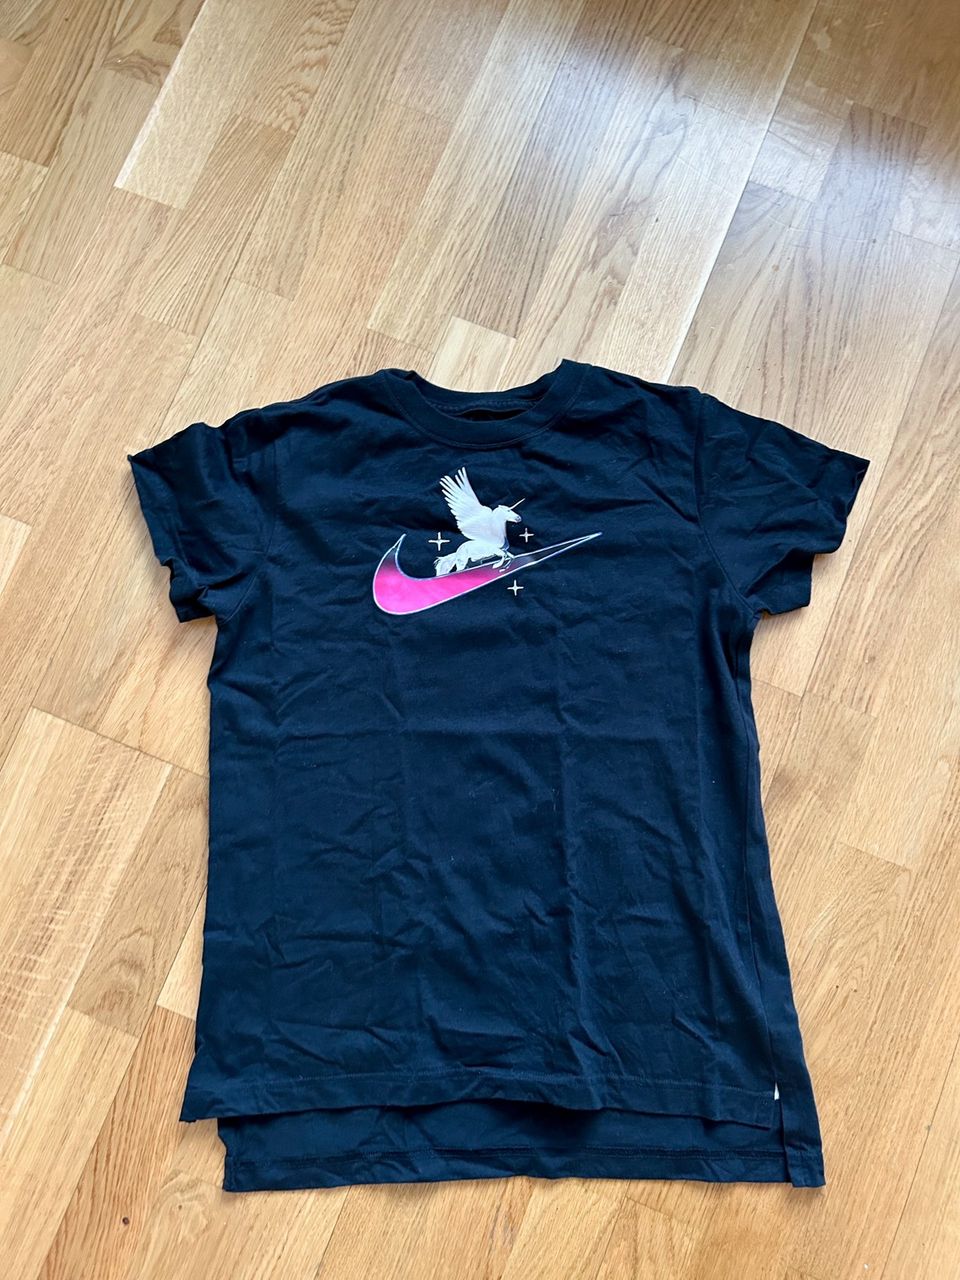 New Nike t-shirt